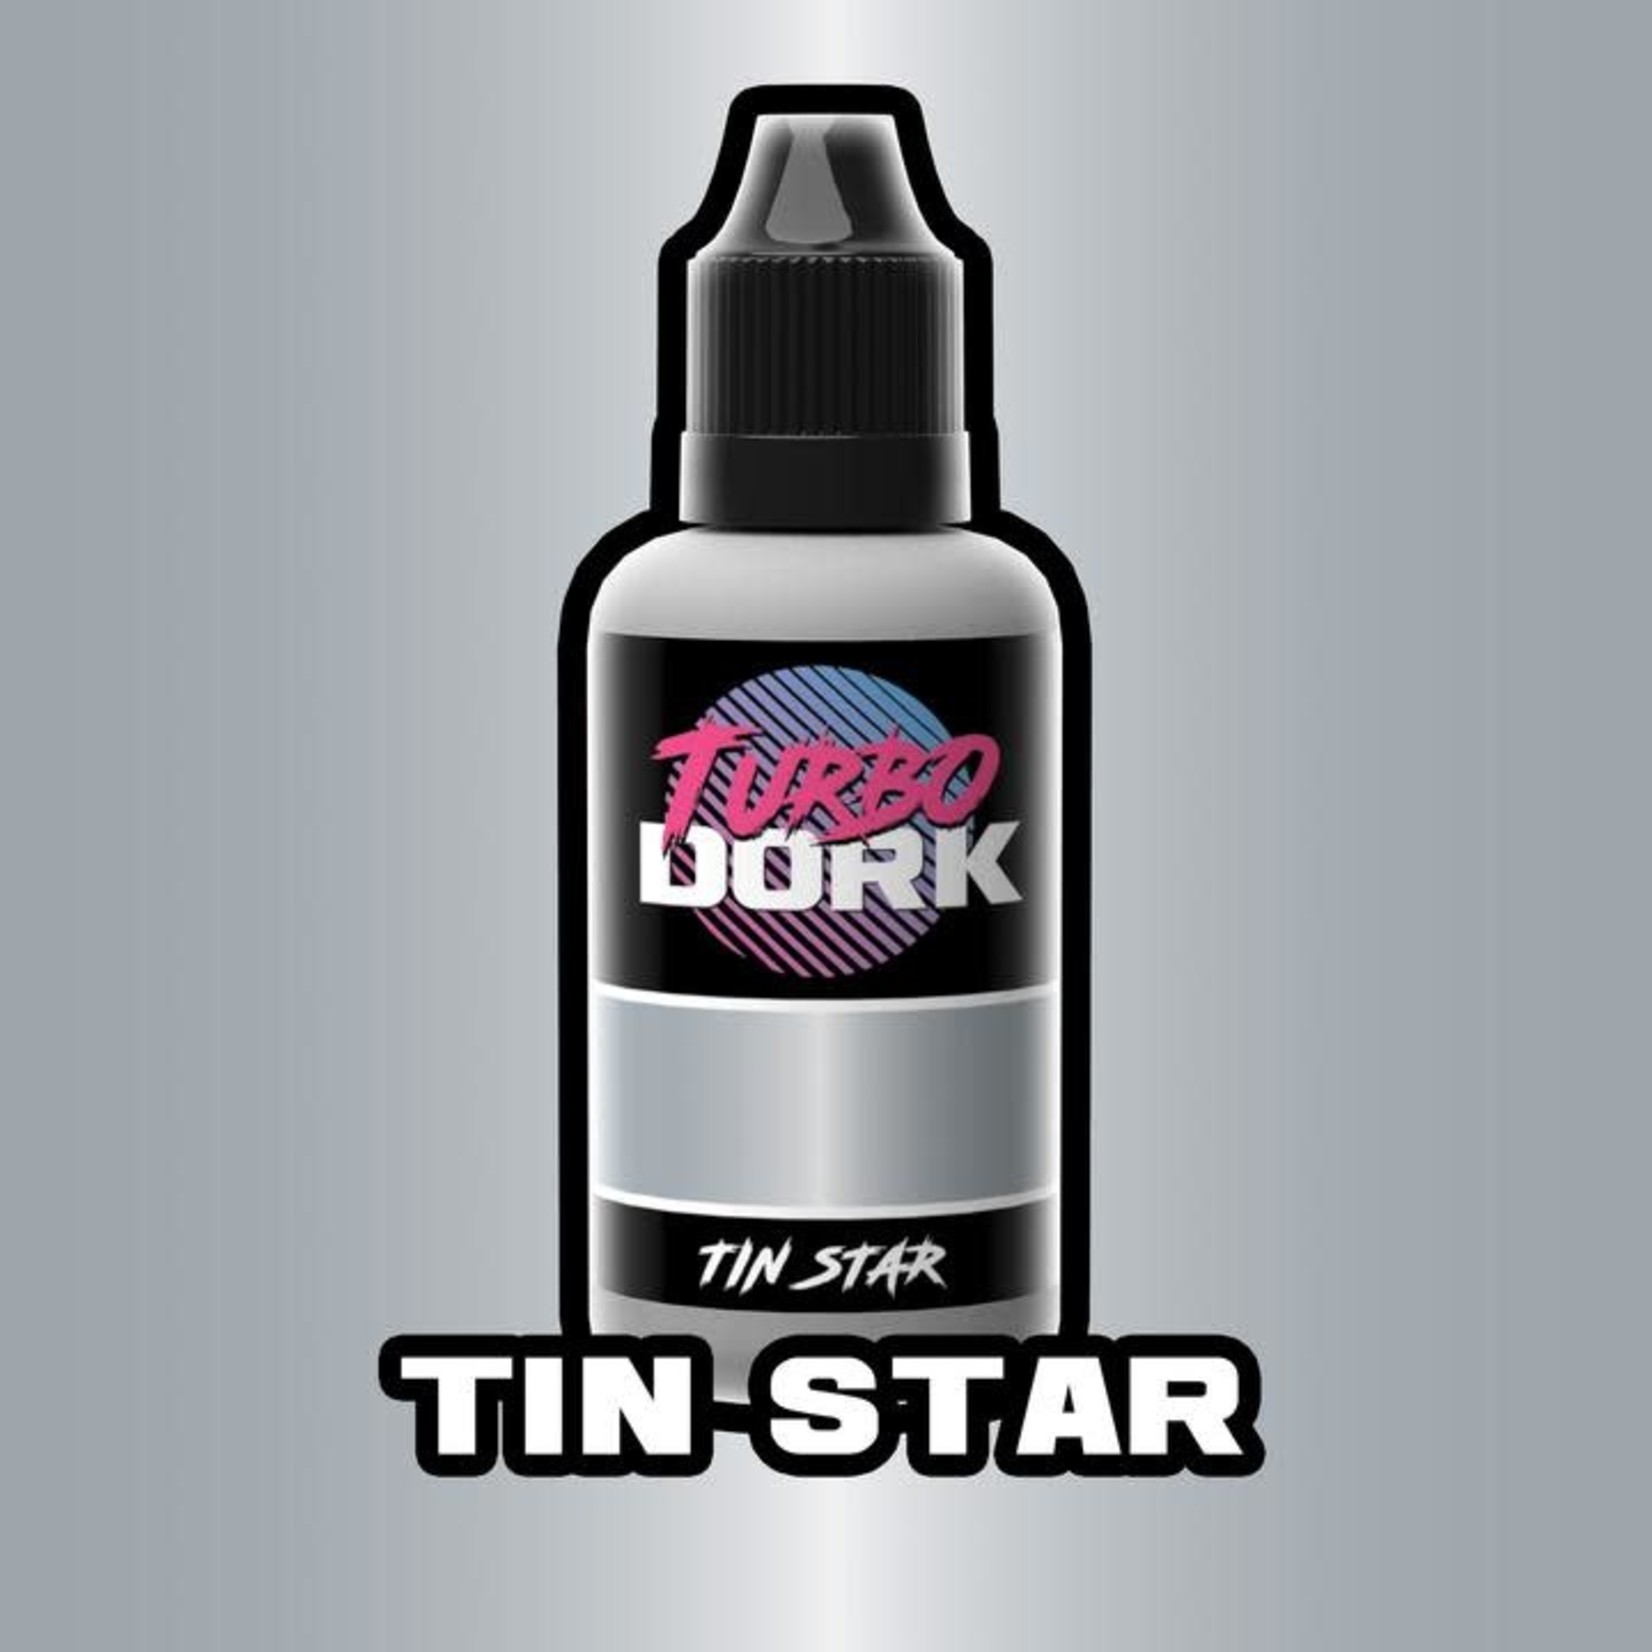 Turbo Dork Metallic Acrylic Tin Star 20ml